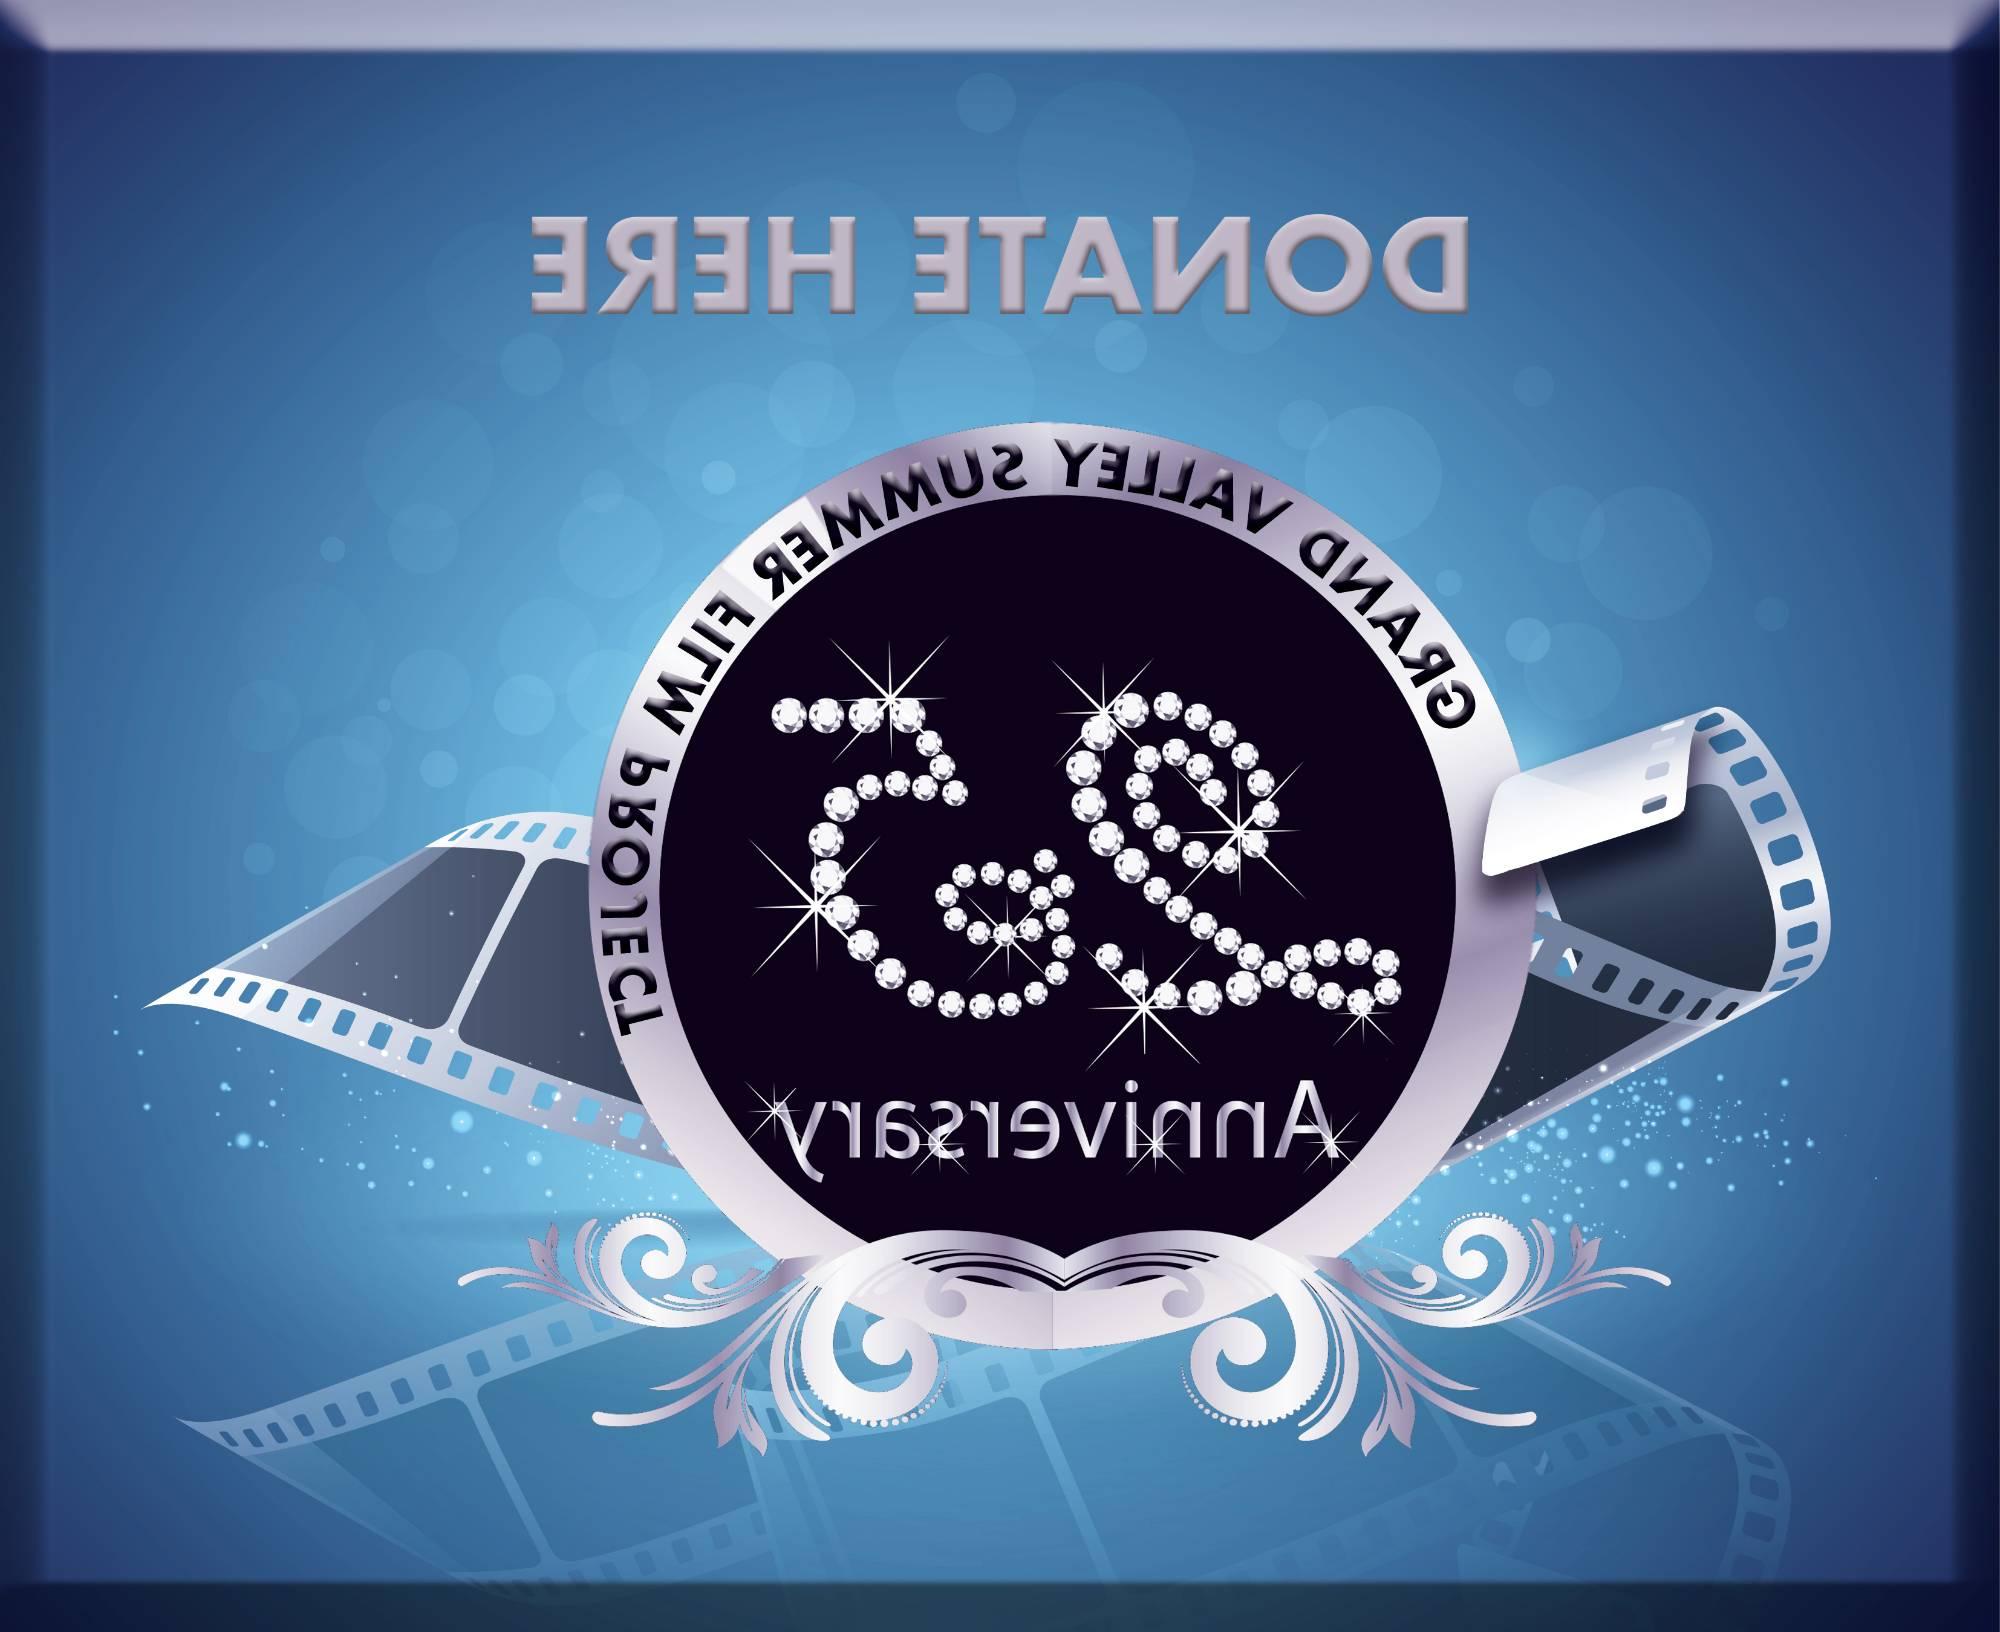 DONATE HERE GVSU Summer Film Project 25 Anniversary